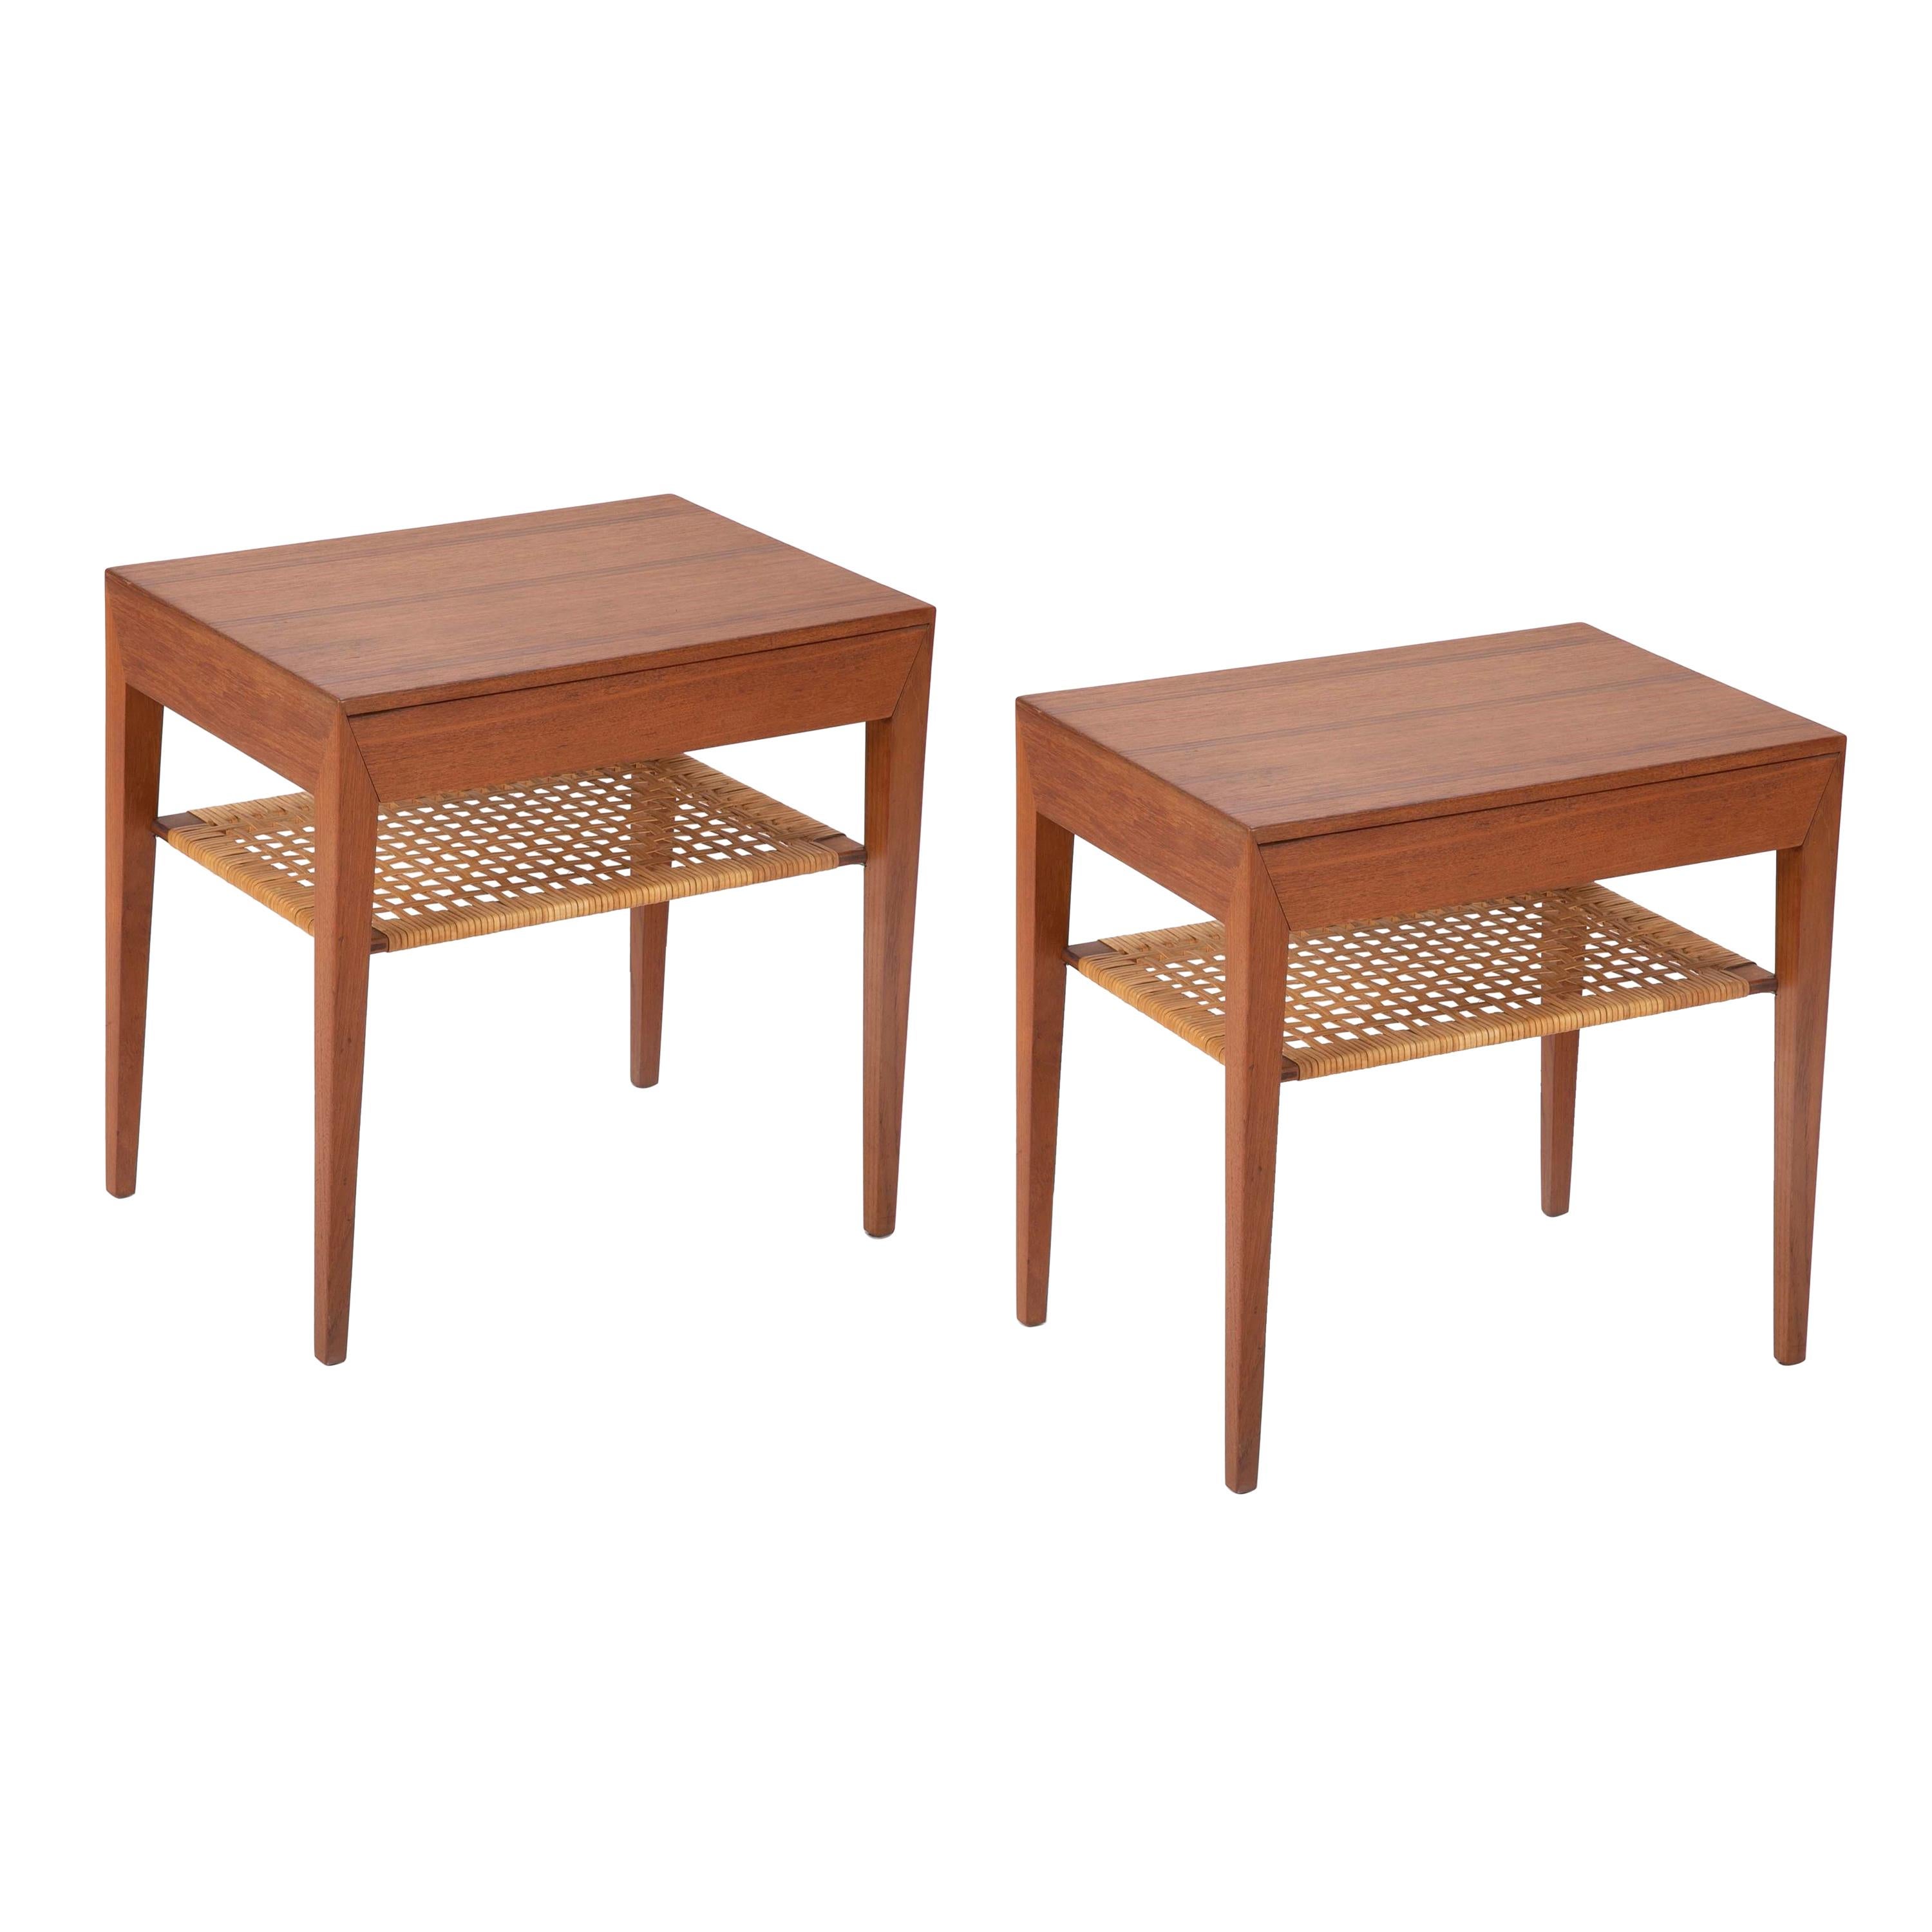 Pair of Teak Bedside Tables with Rush Shelf Designed by Severin Hansen Jr.